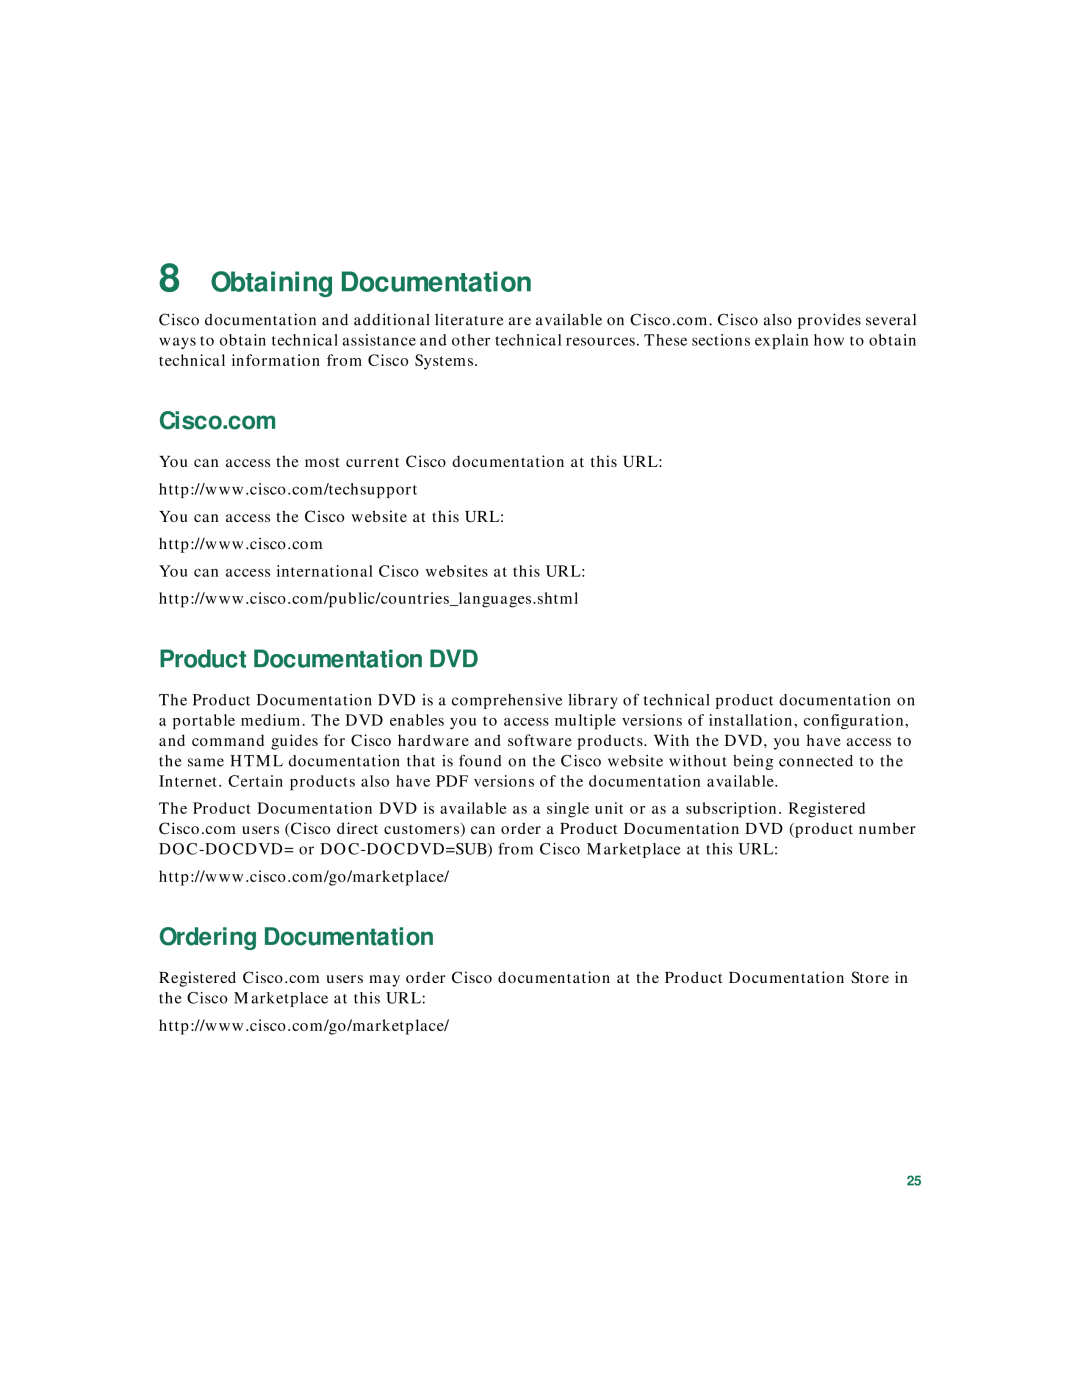 Cisco Systems 3020 warranty Obtaining Documentation, Cisco.com, Product Documentation DVD, Ordering Documentation 